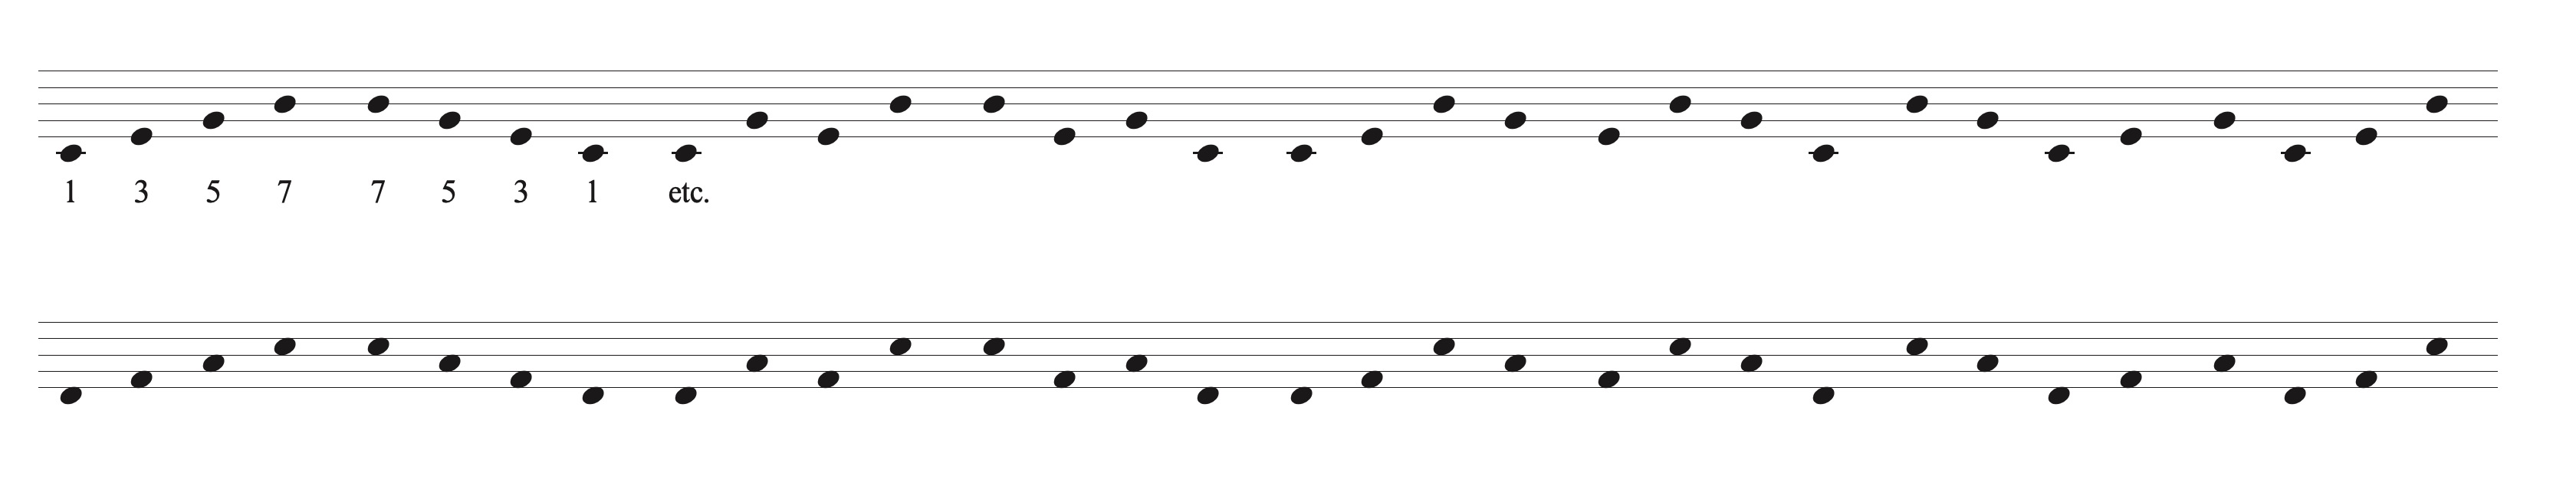 Seventh chord pattern2